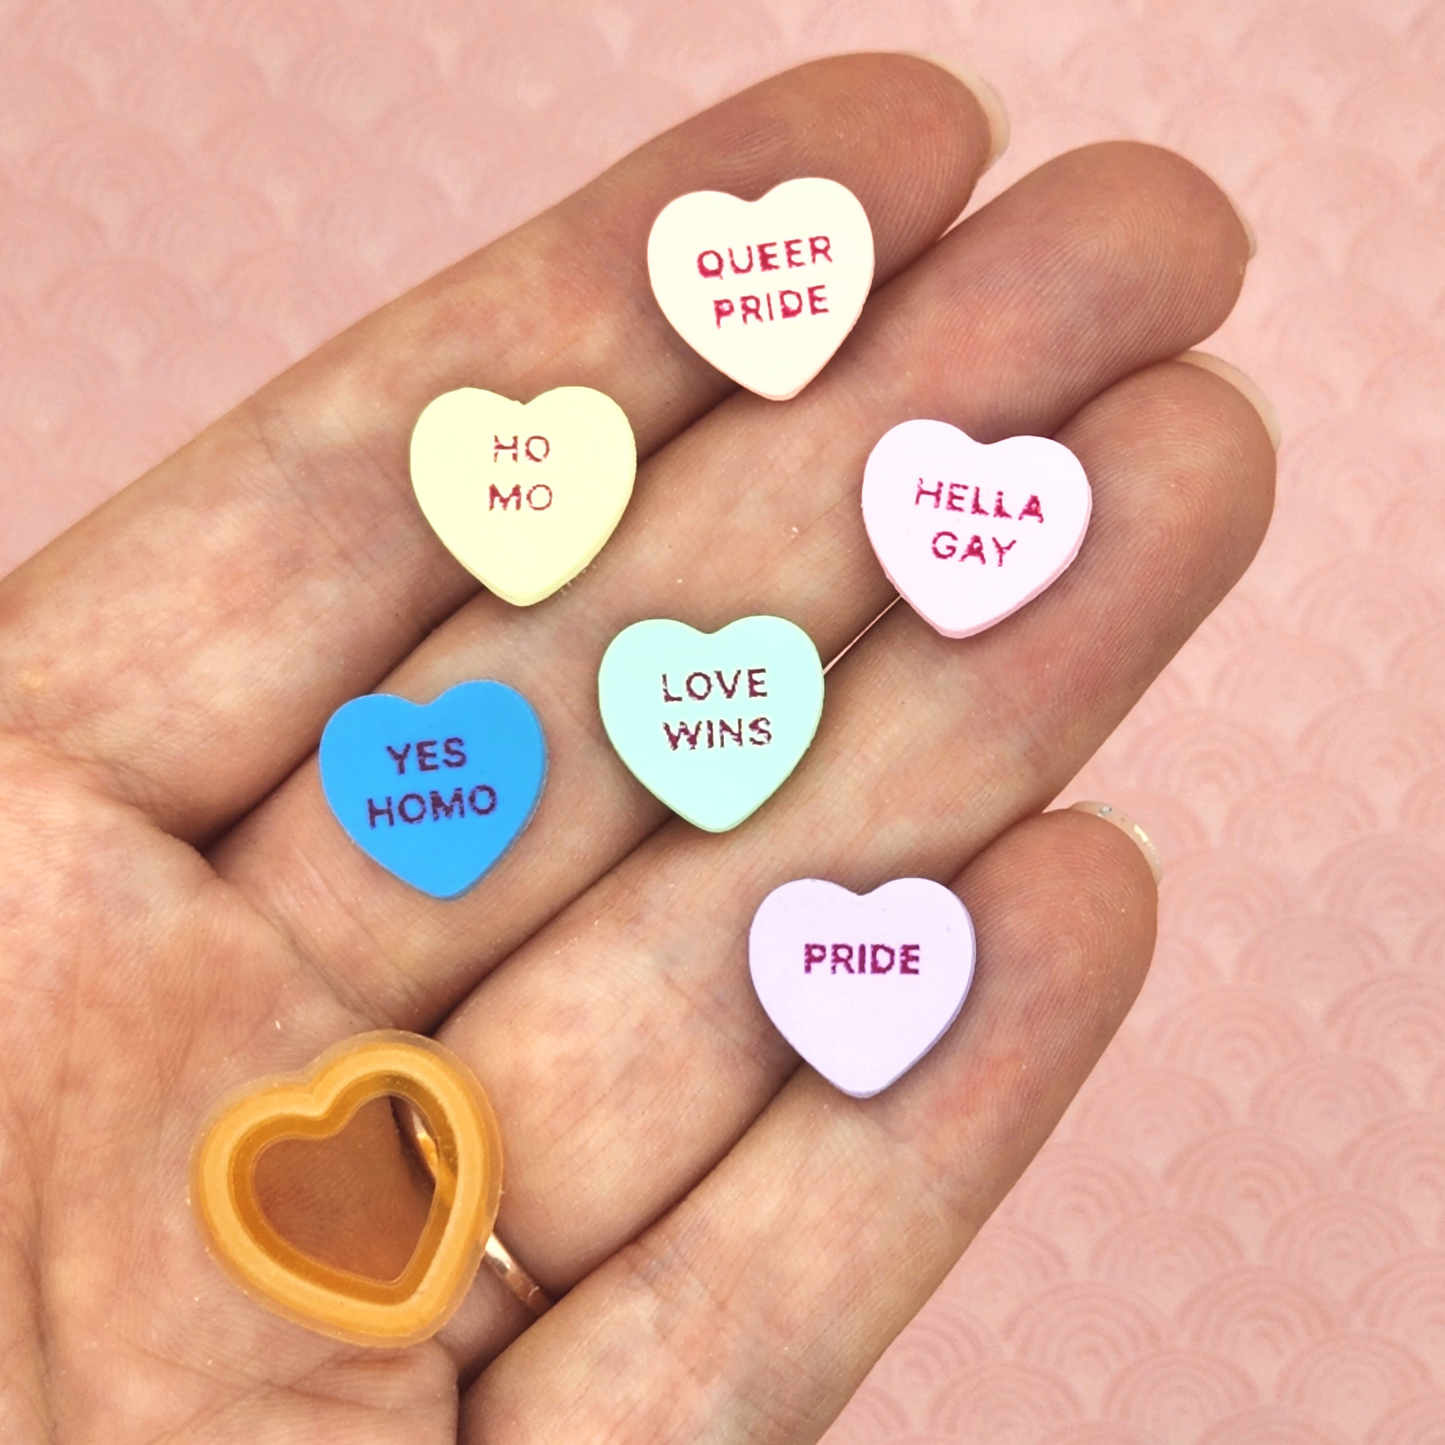 polymer clay conversation hearts with the words "QUEER PRIDE", "HO MO", "HELLA GAY", "LOVE WINS", "YES HOMO", "LOVE WINS", "PRIDE"